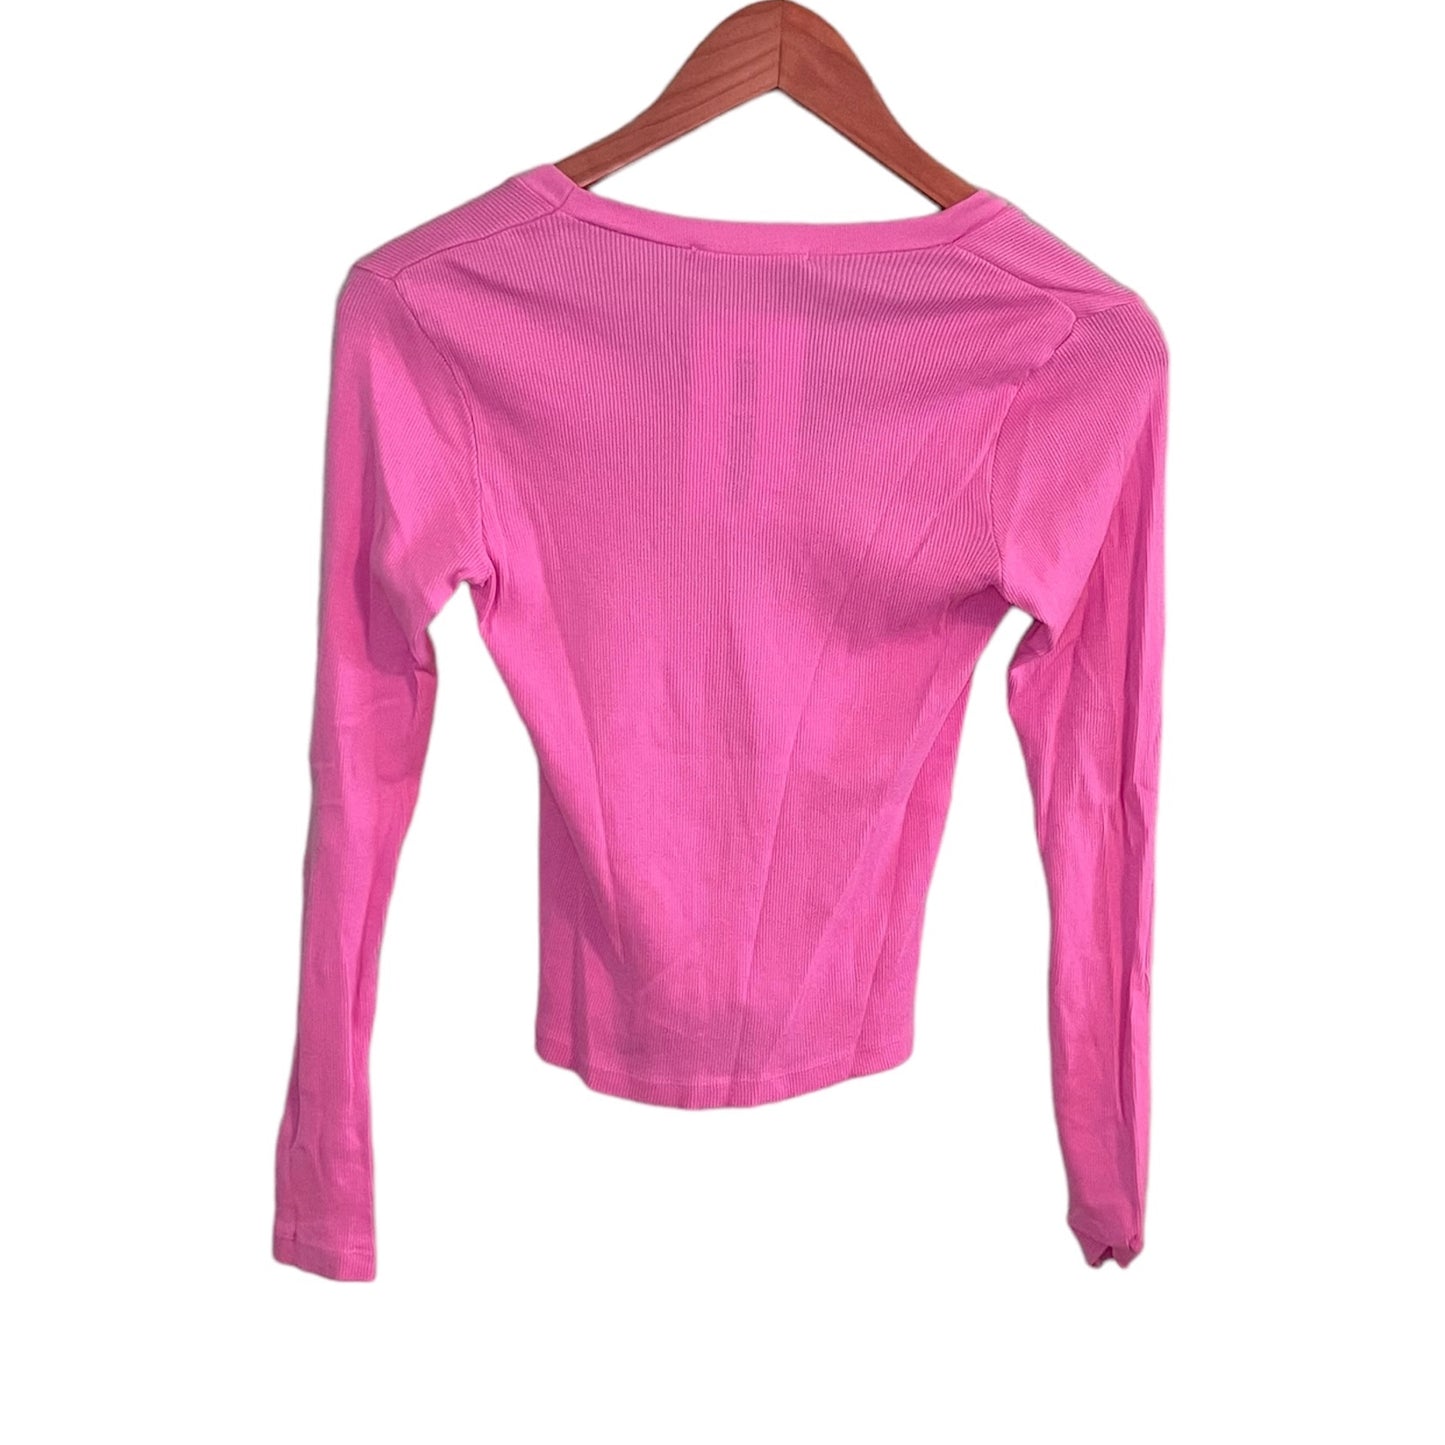 NWT Brandy Melville Pink Long Sleeve V-Neck